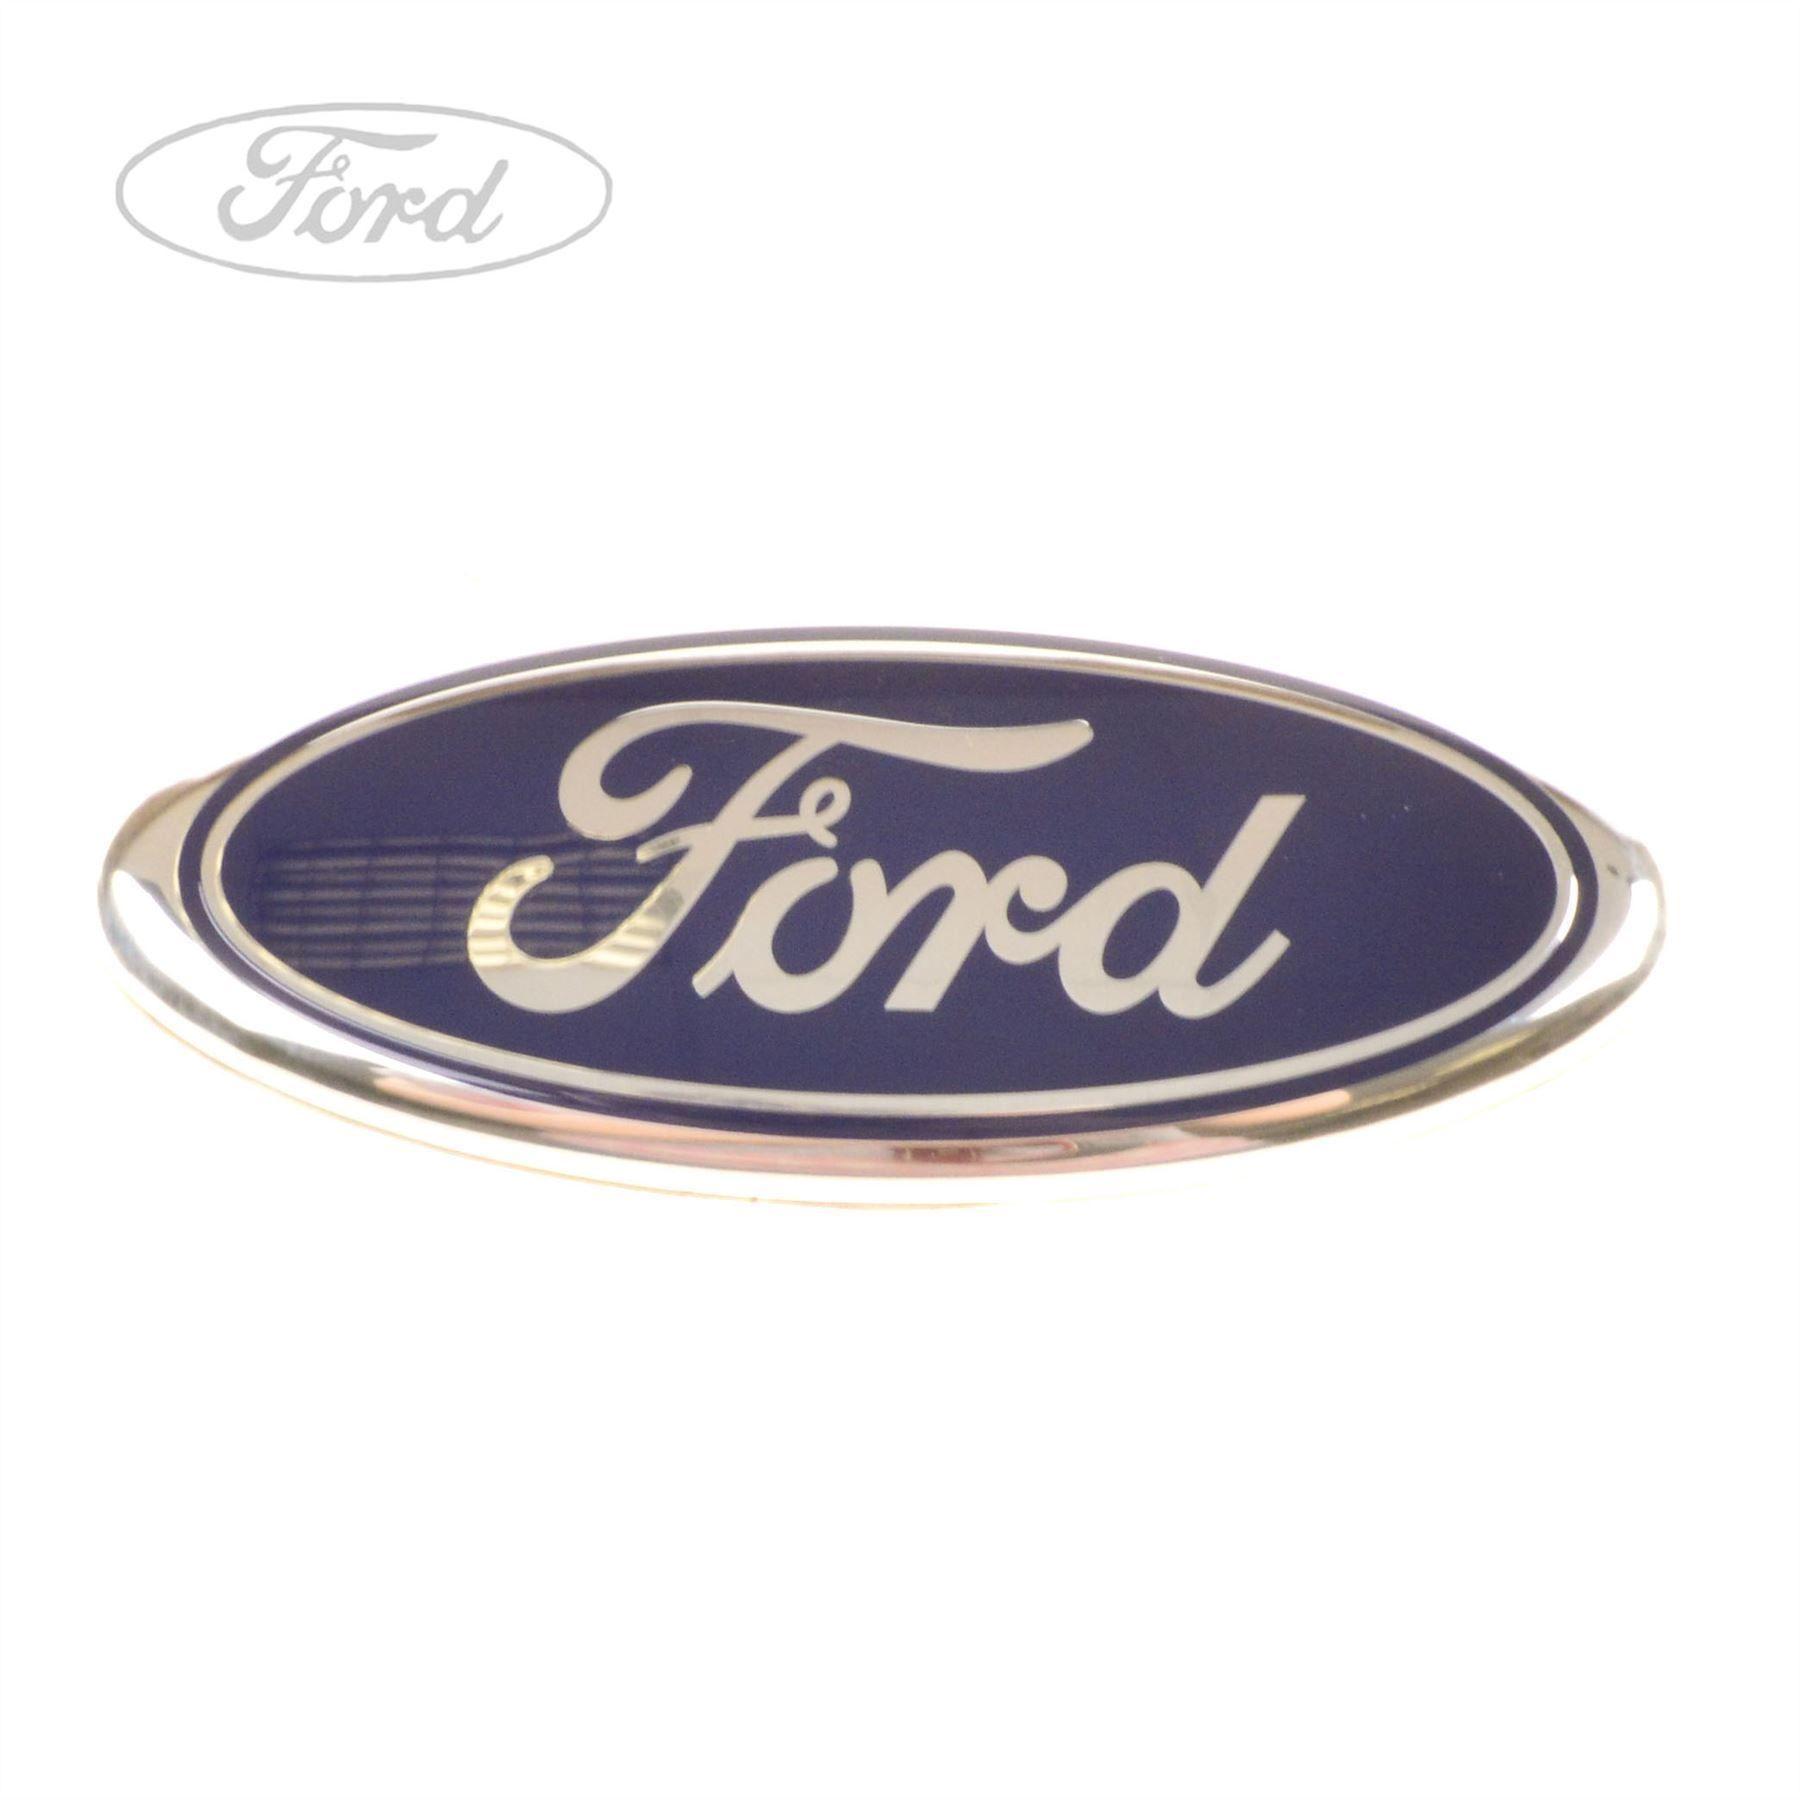 Ford Fusion Logo - Genuine Ford Fusion Radiator Grille Emblem Badge 1207555 | eBay